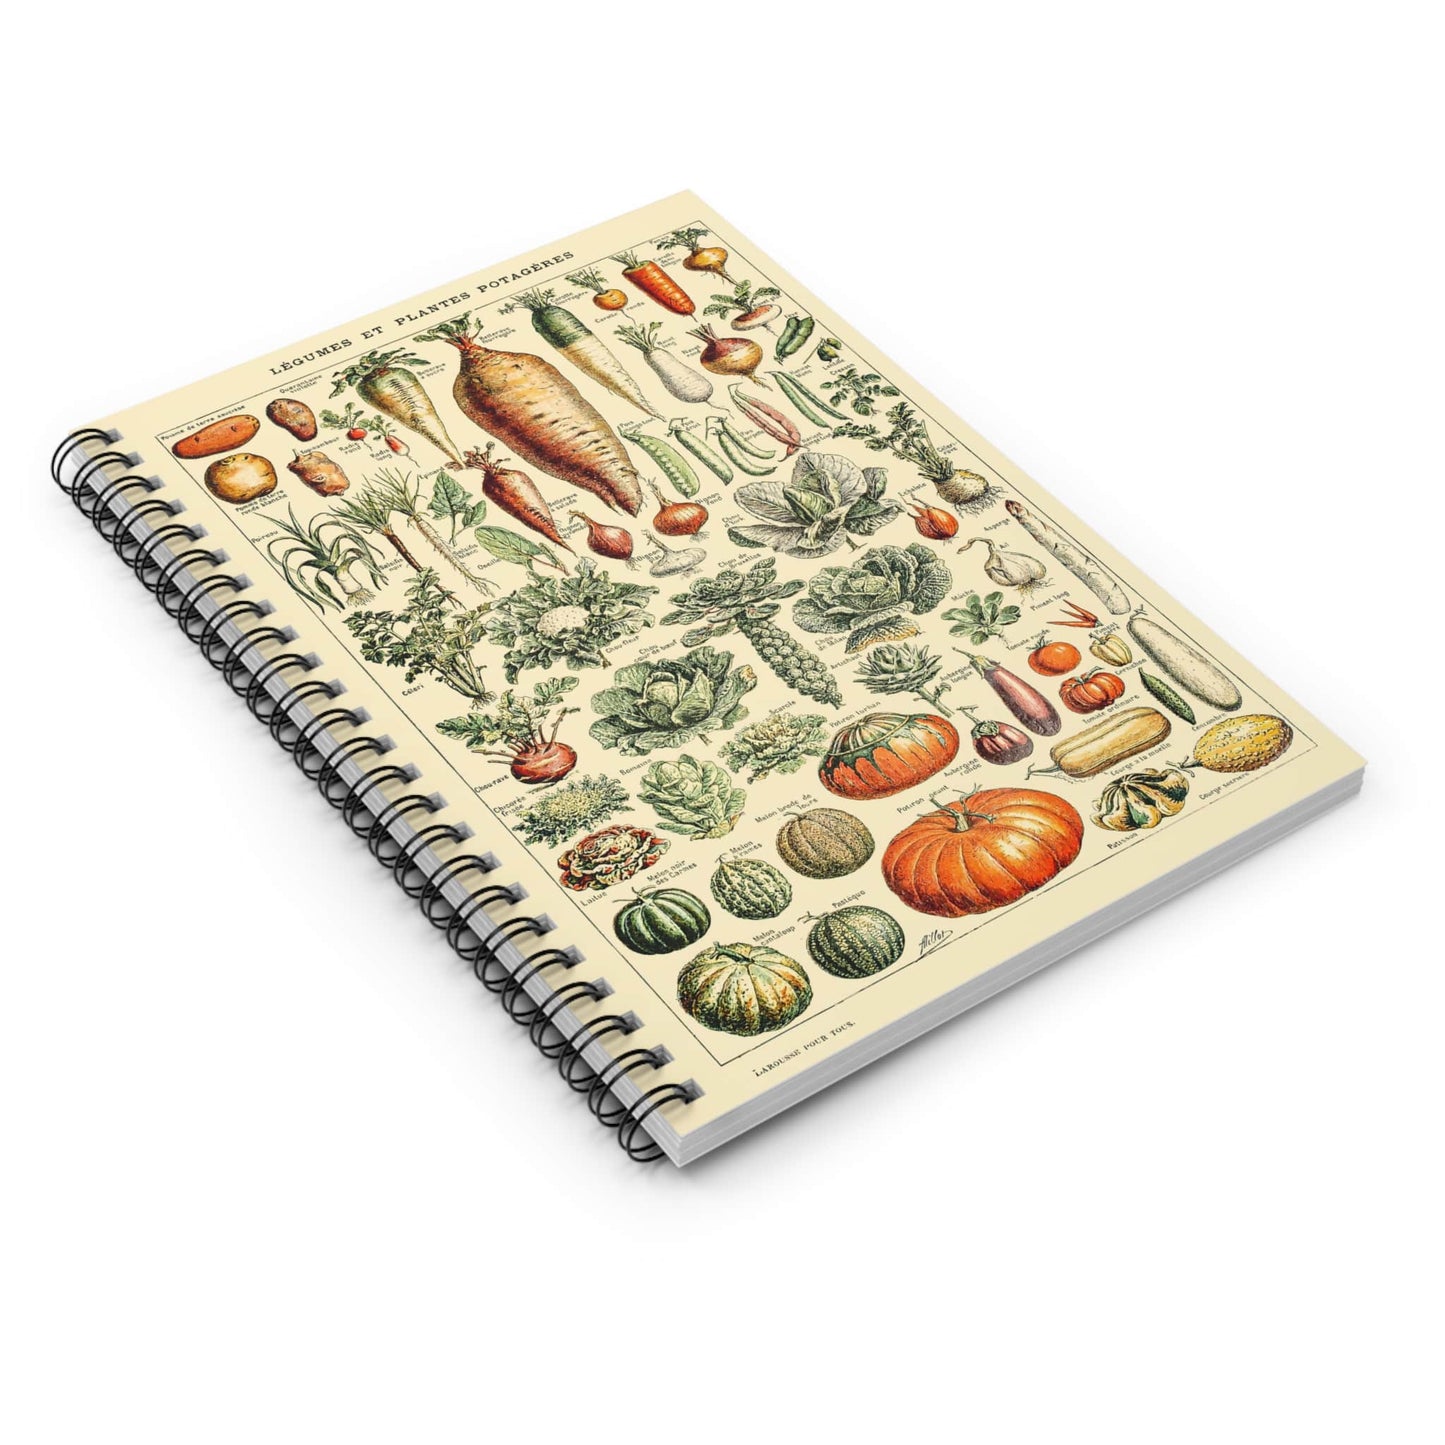 Vegetarian Spiral Notebook Laying Flat on White Surface